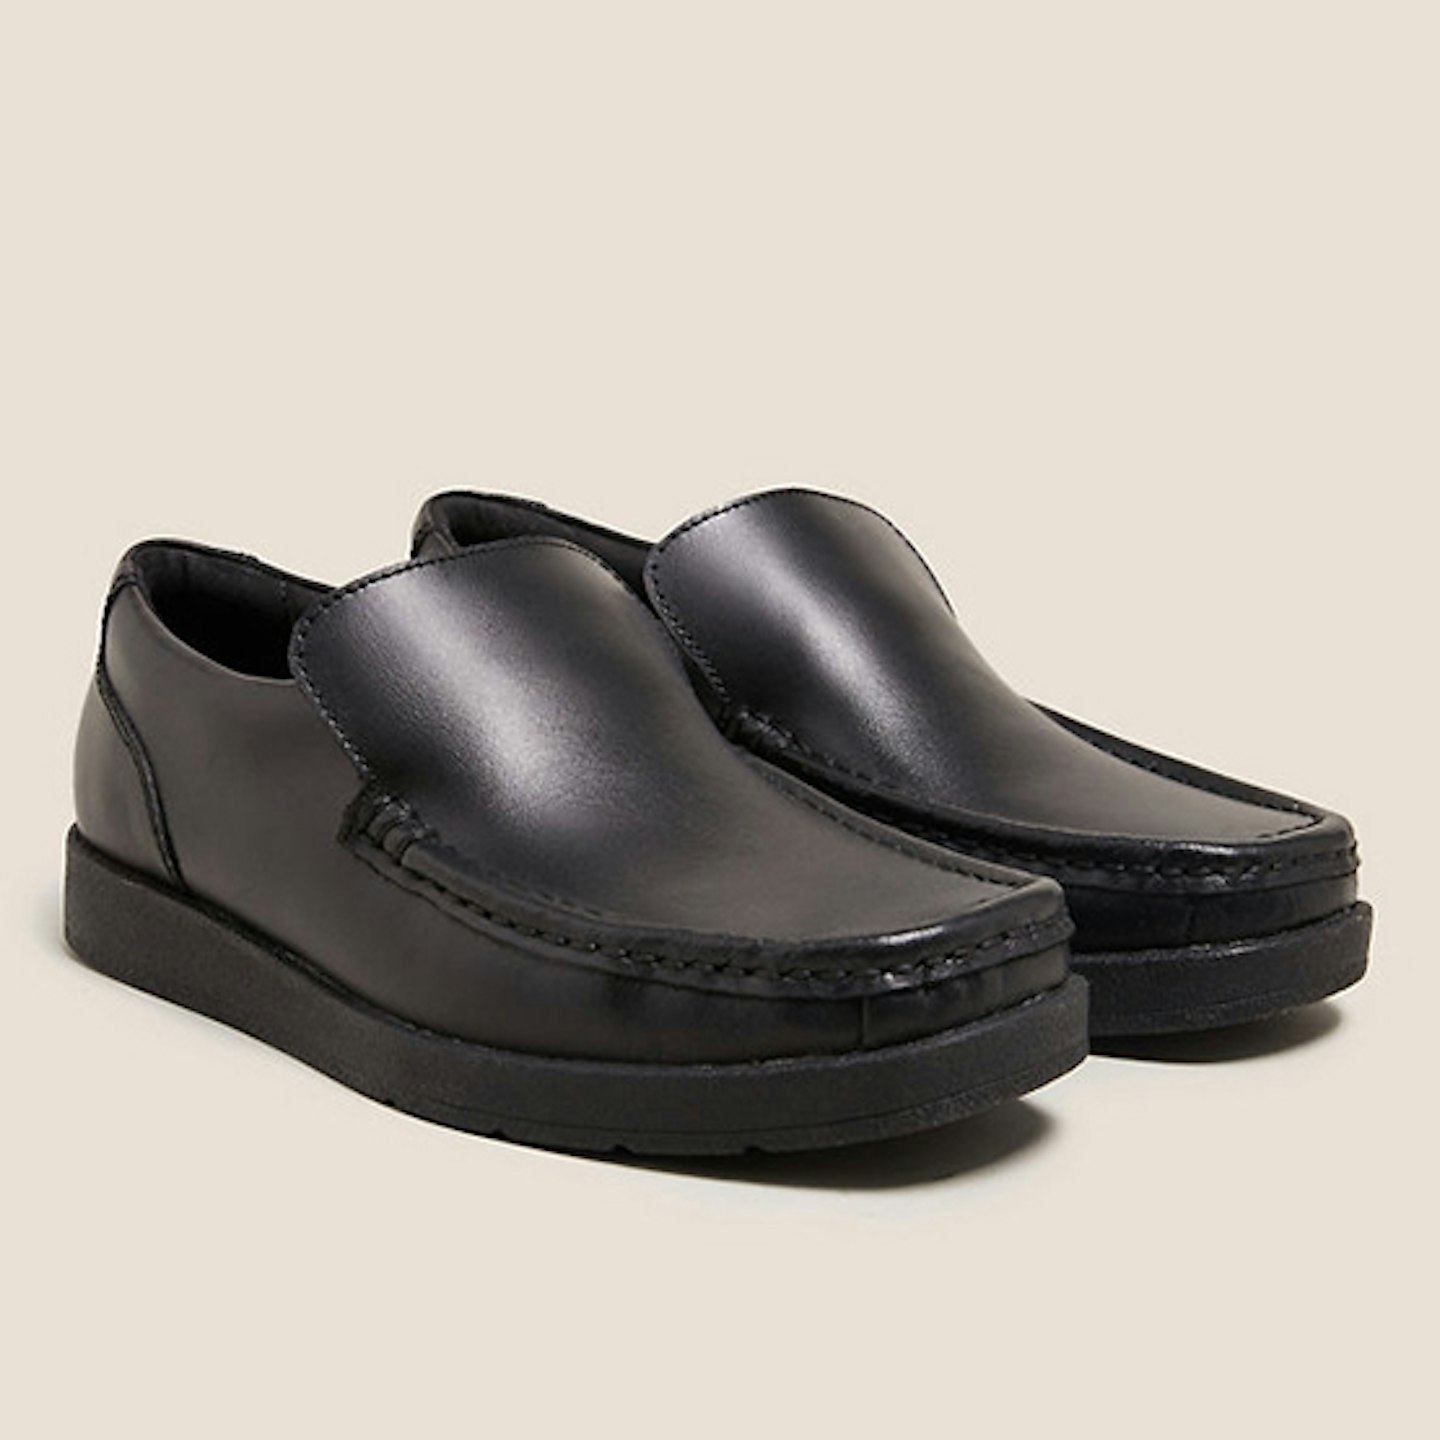 Kidsu0026#039; Leather Slip-on Loafer School Shoes